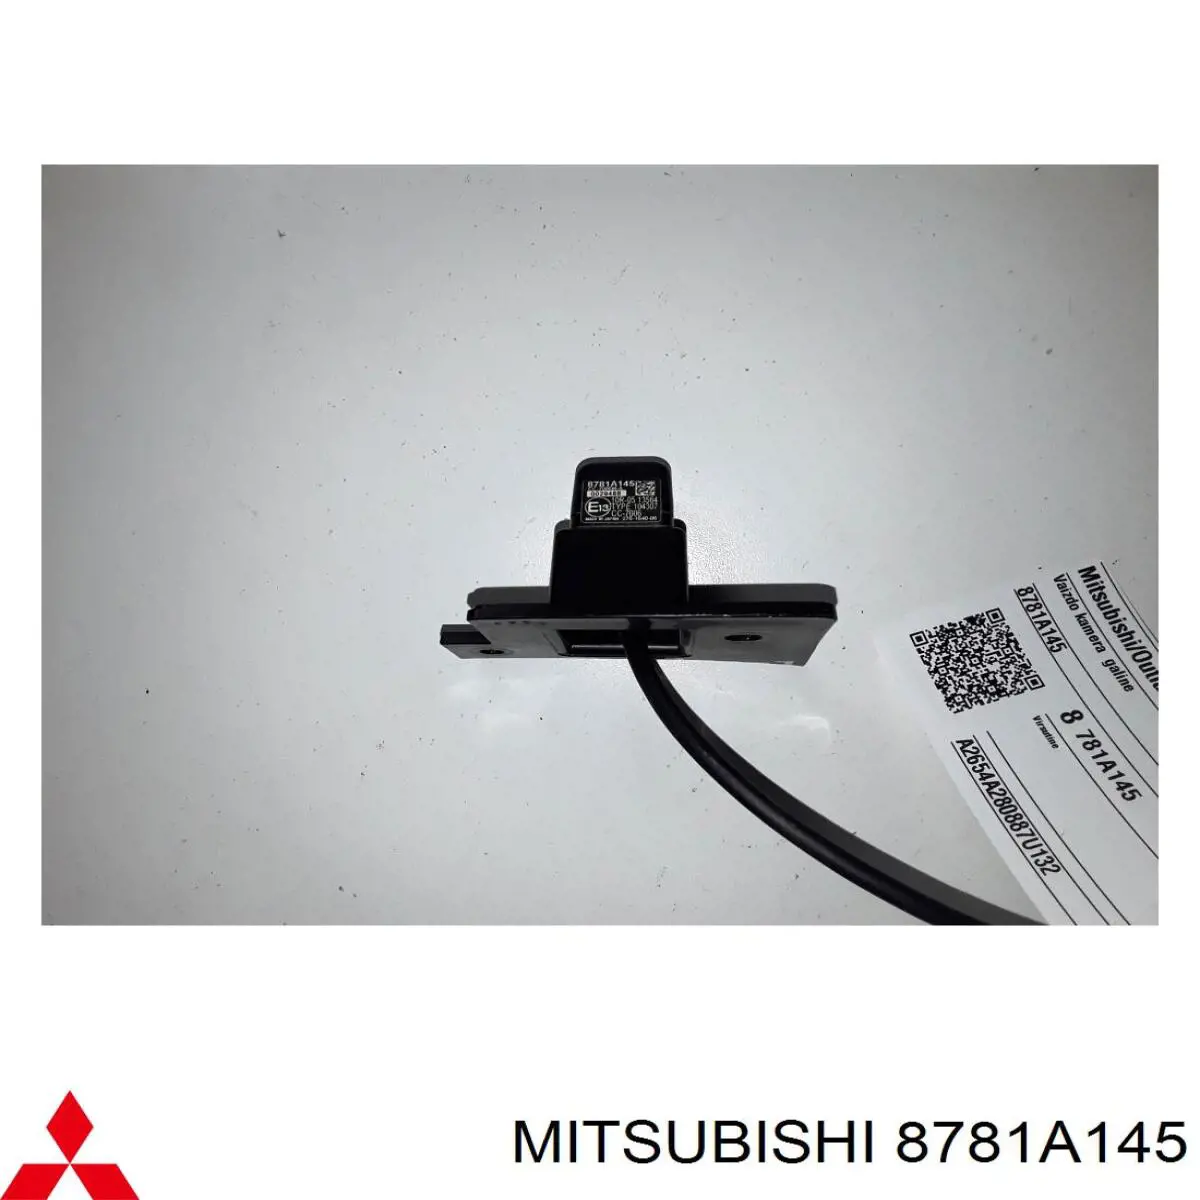 8781A145 Mitsubishi câmara do sistema para asseguramento de visibilidade